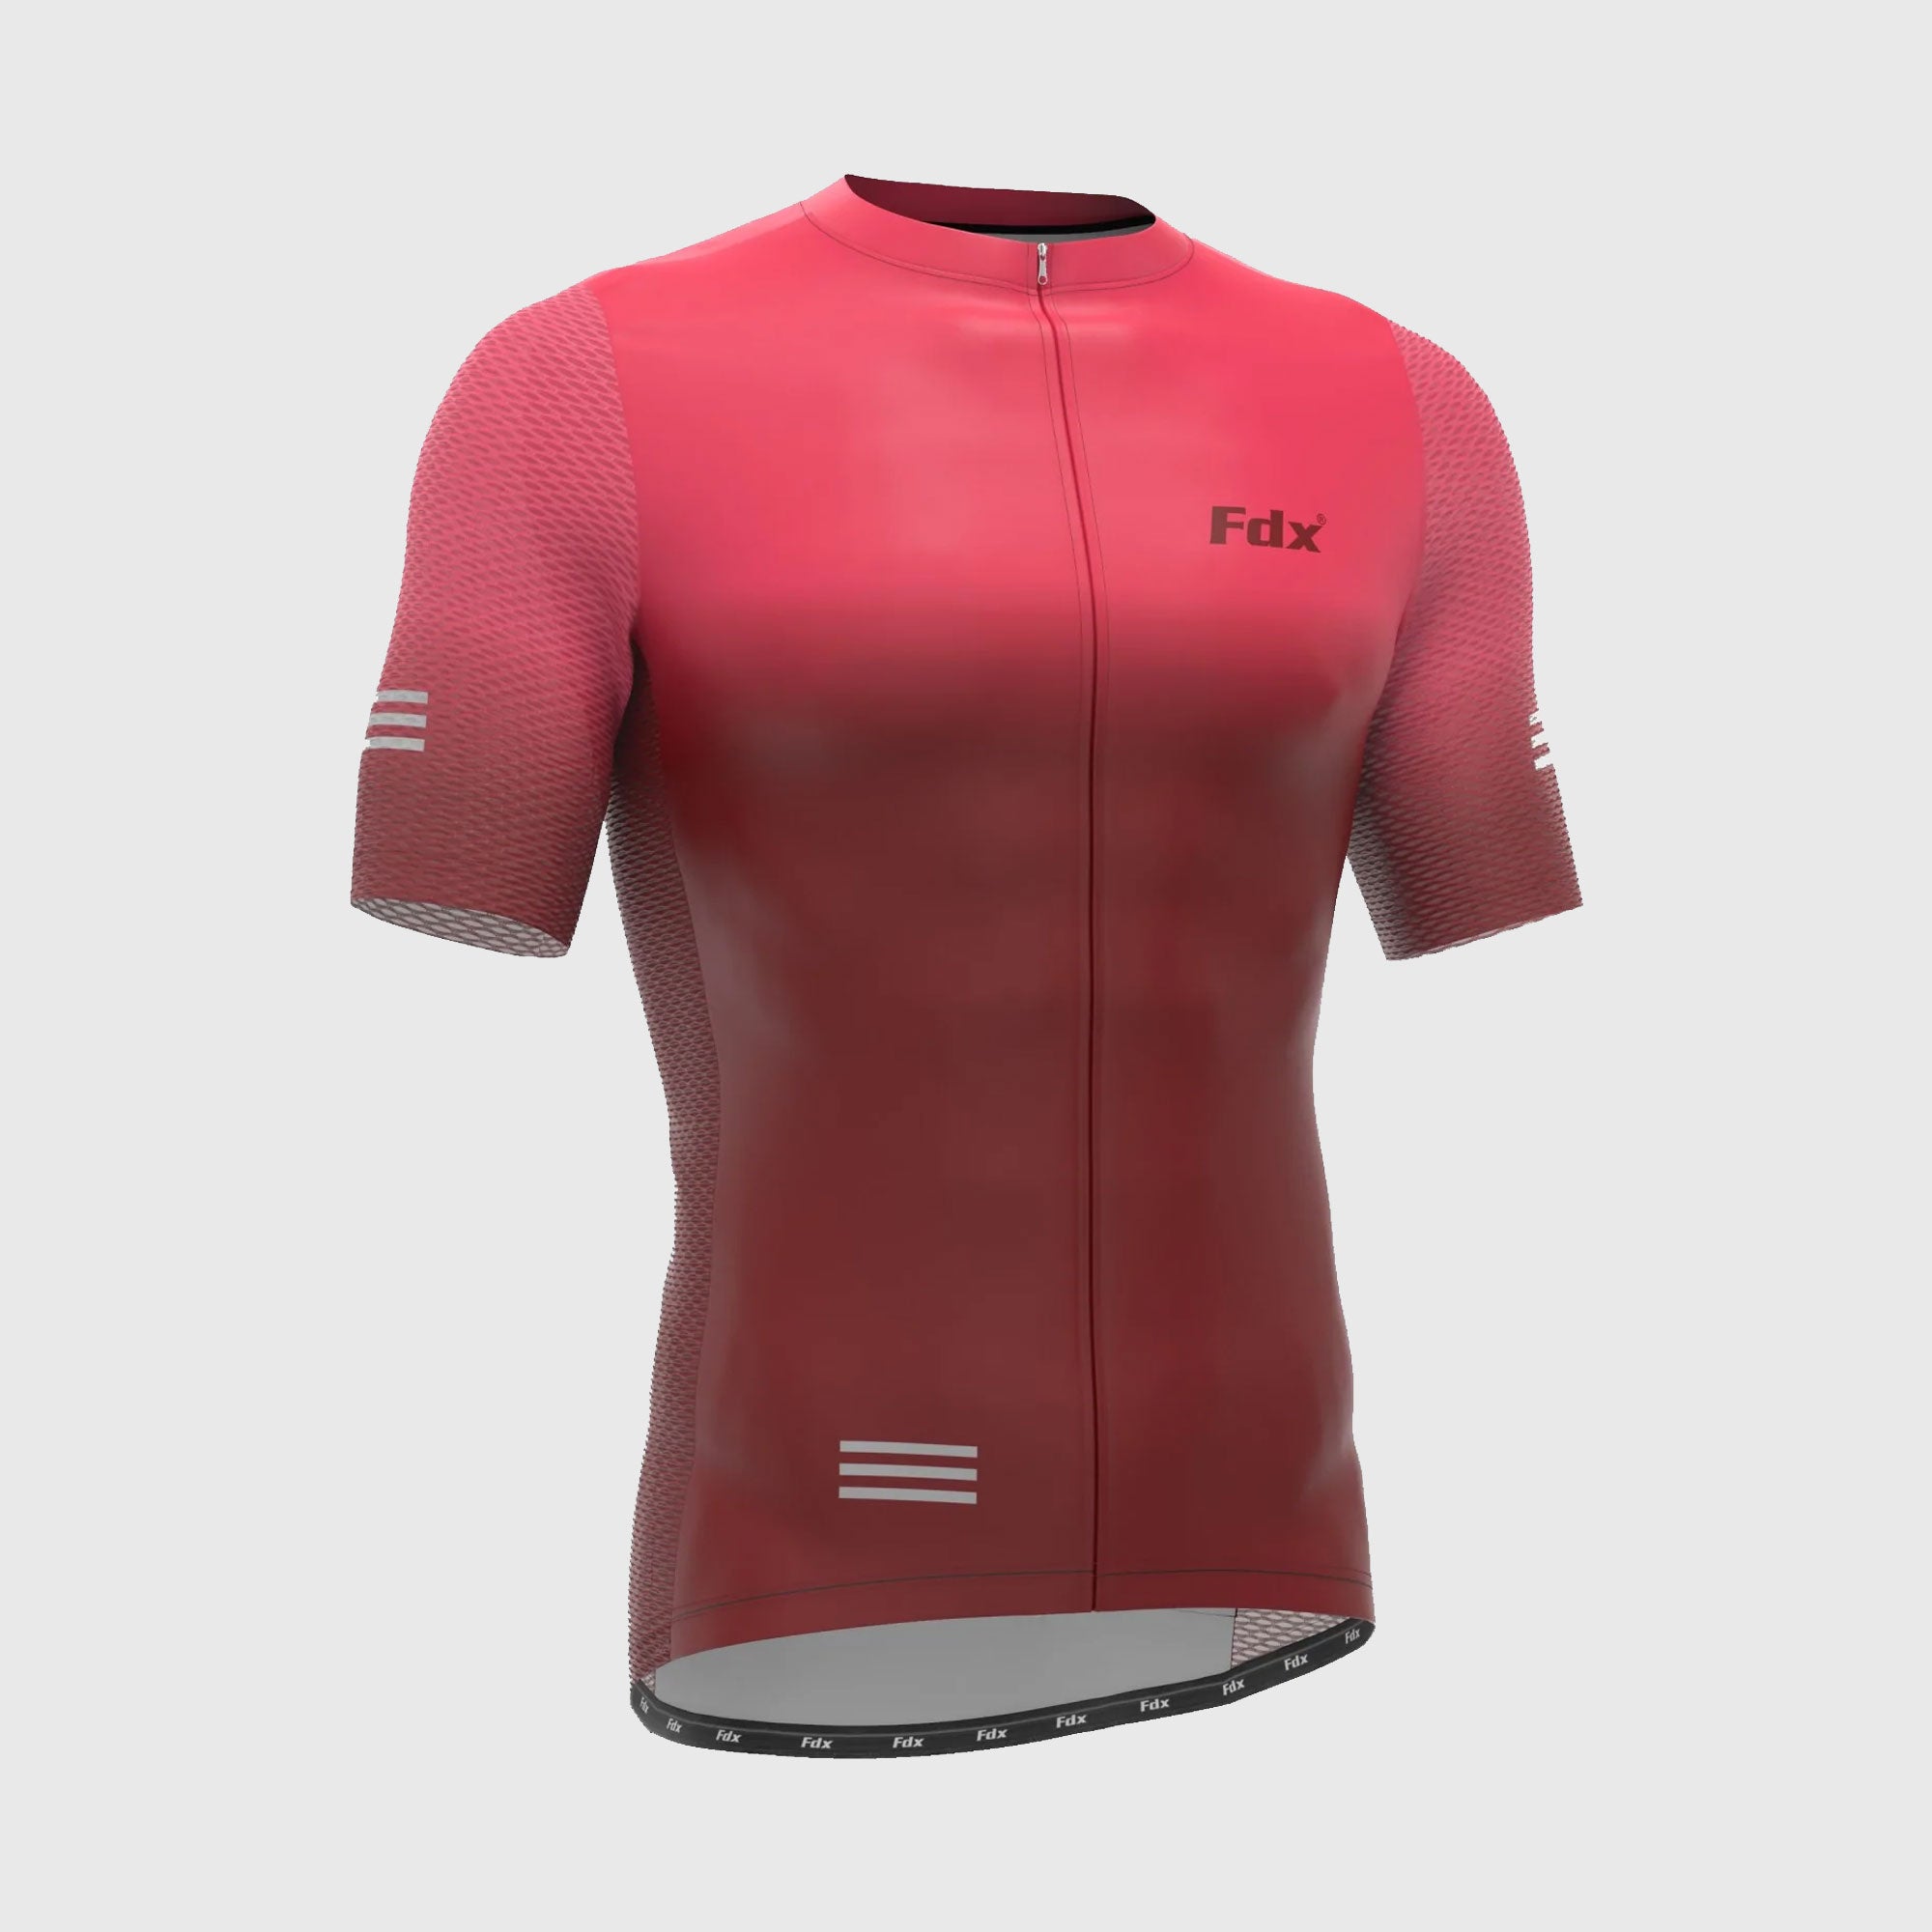 Fdx Best Men’s Pink / Maroon short sleeves cycling jersey Reflective details breathable Hi-Viz summer lightweight biking top, skin friendly half sleeves cycling mesh shirt for riding, indoor & outdoor